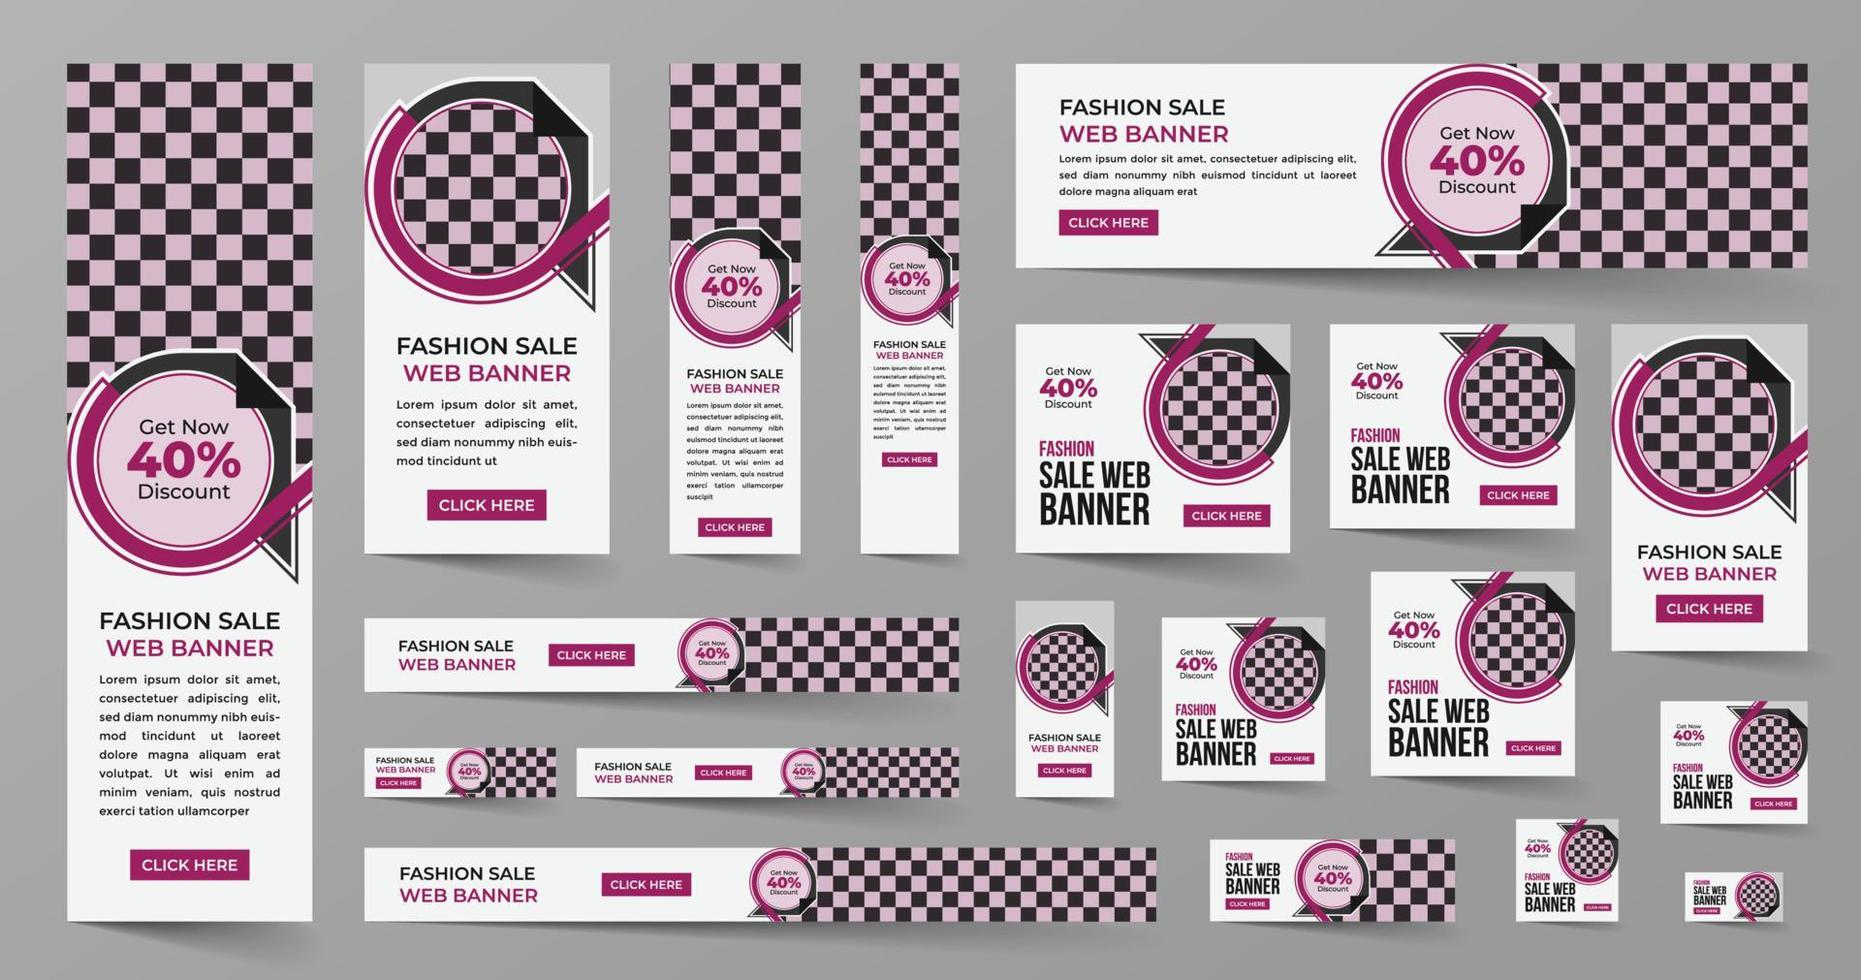 Fashion sales web banner template design vector